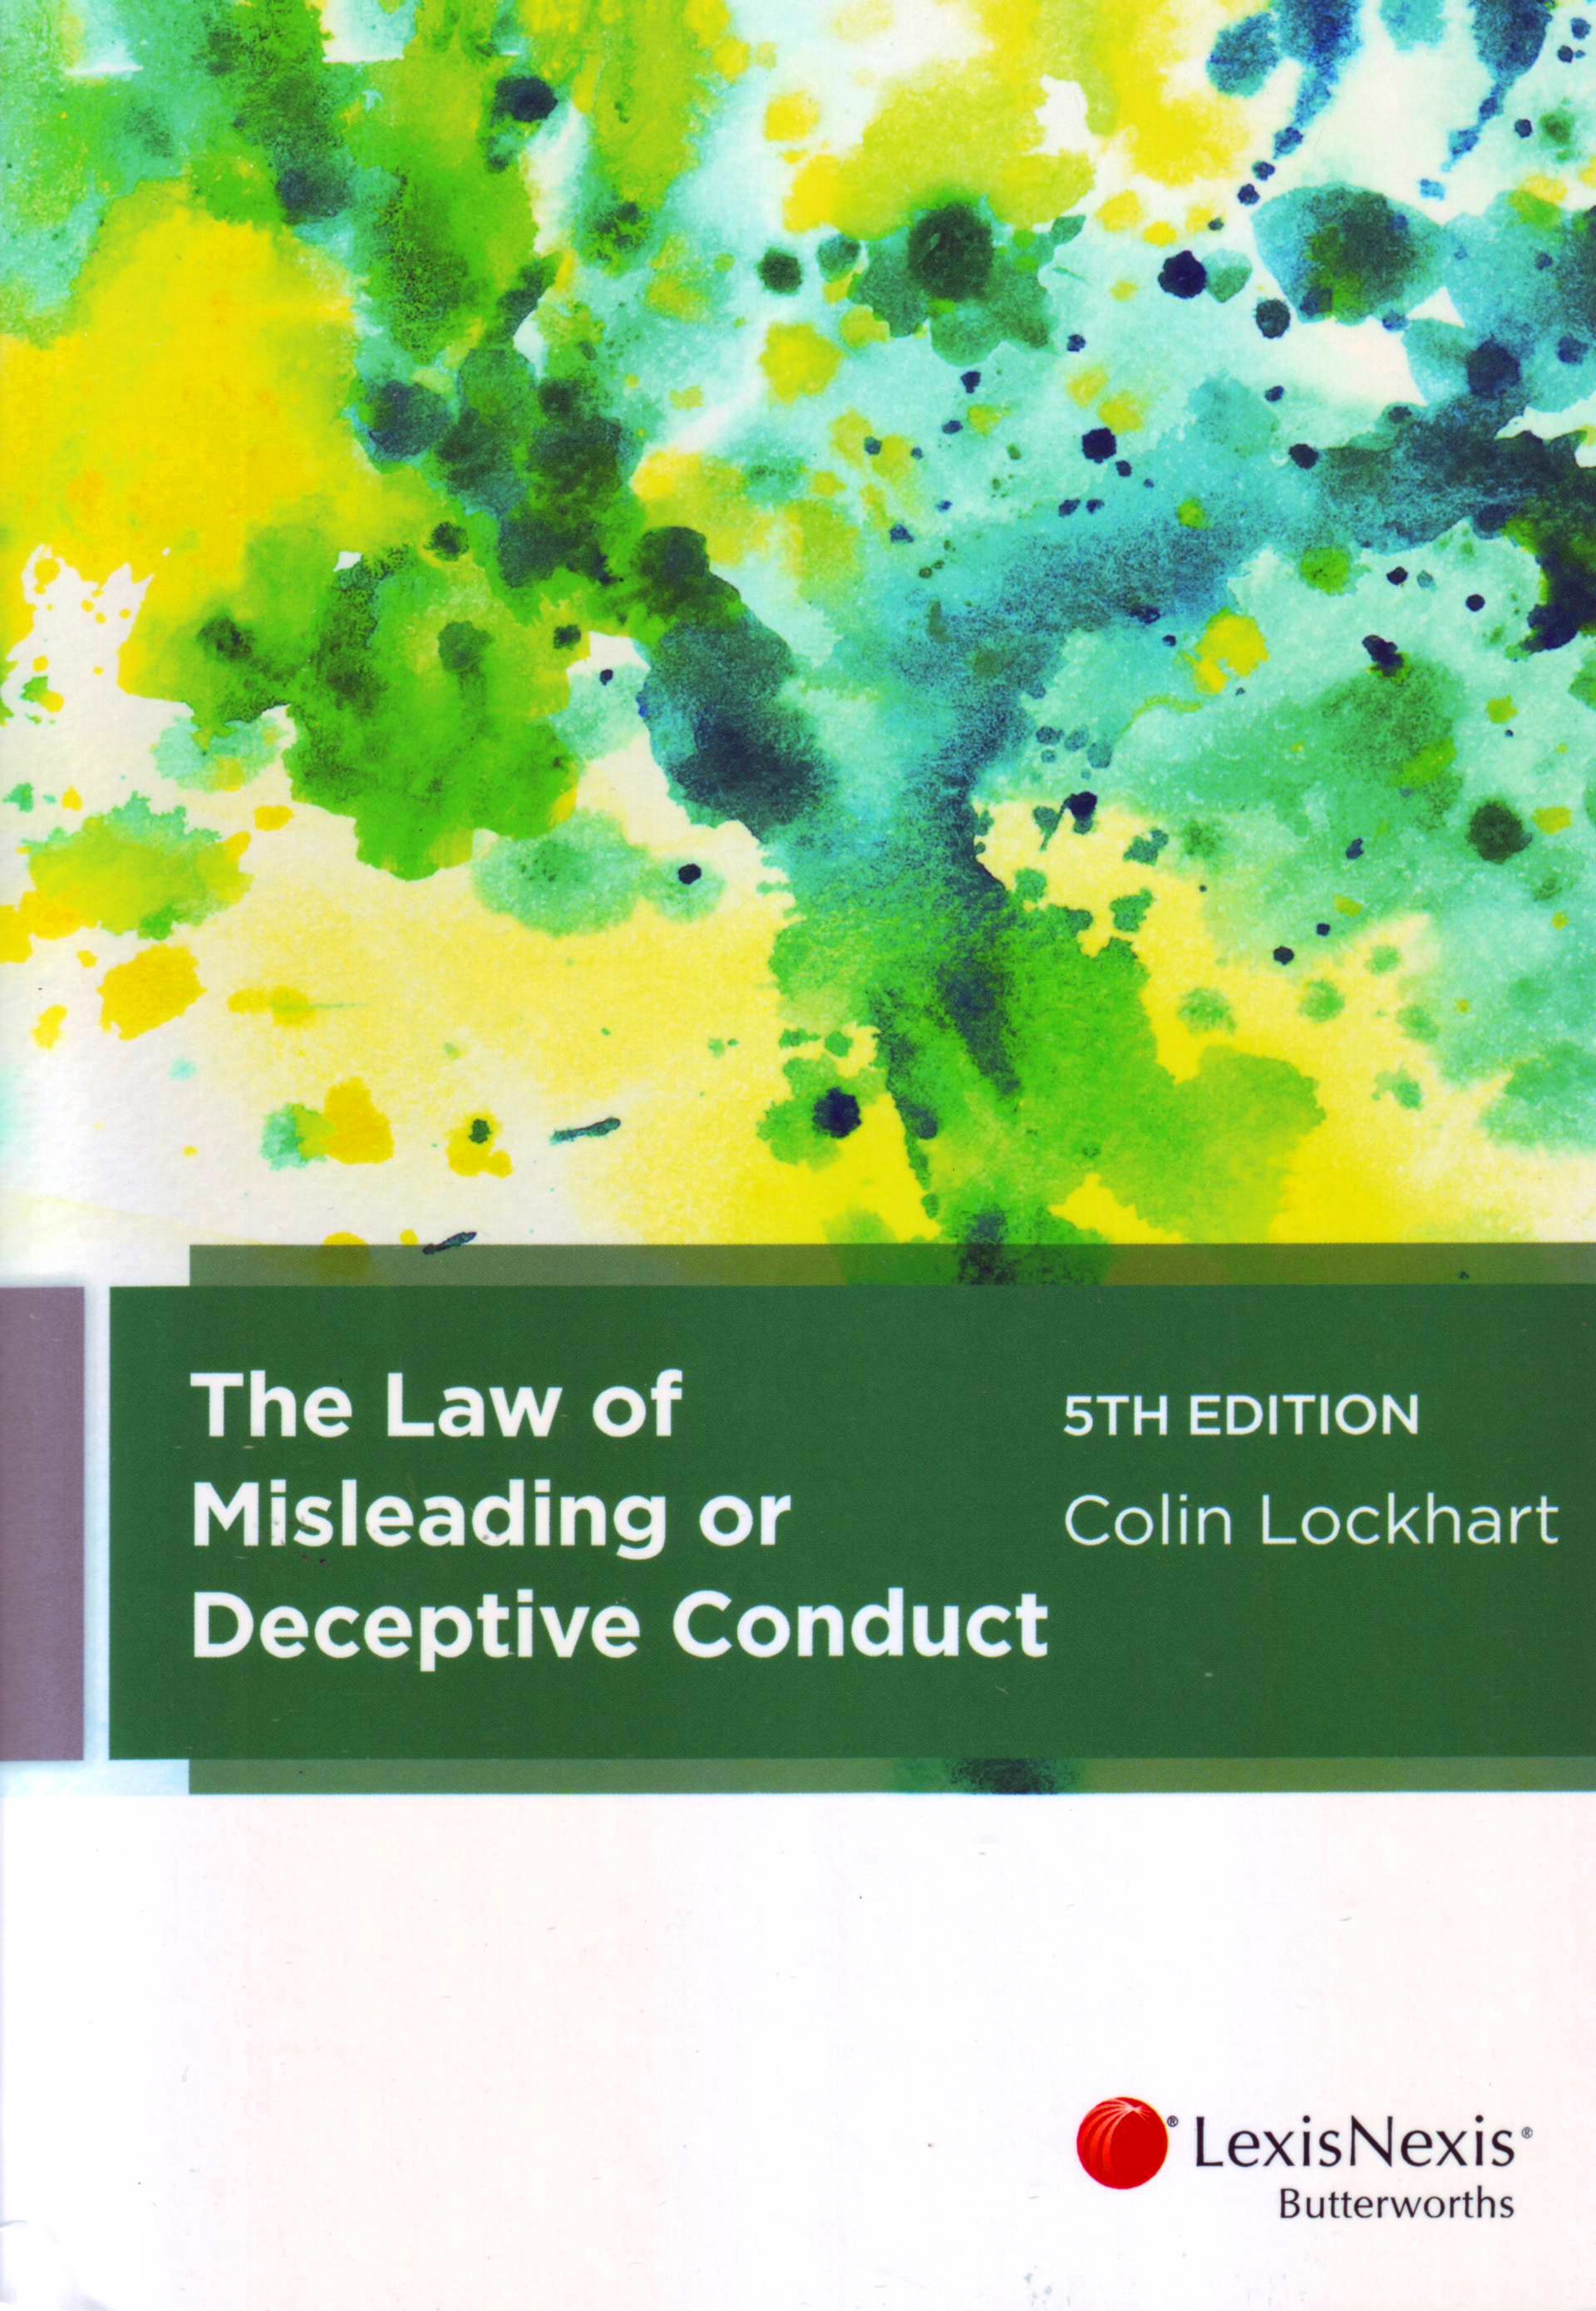 Law of Misleading or Deceptive Conduct e5